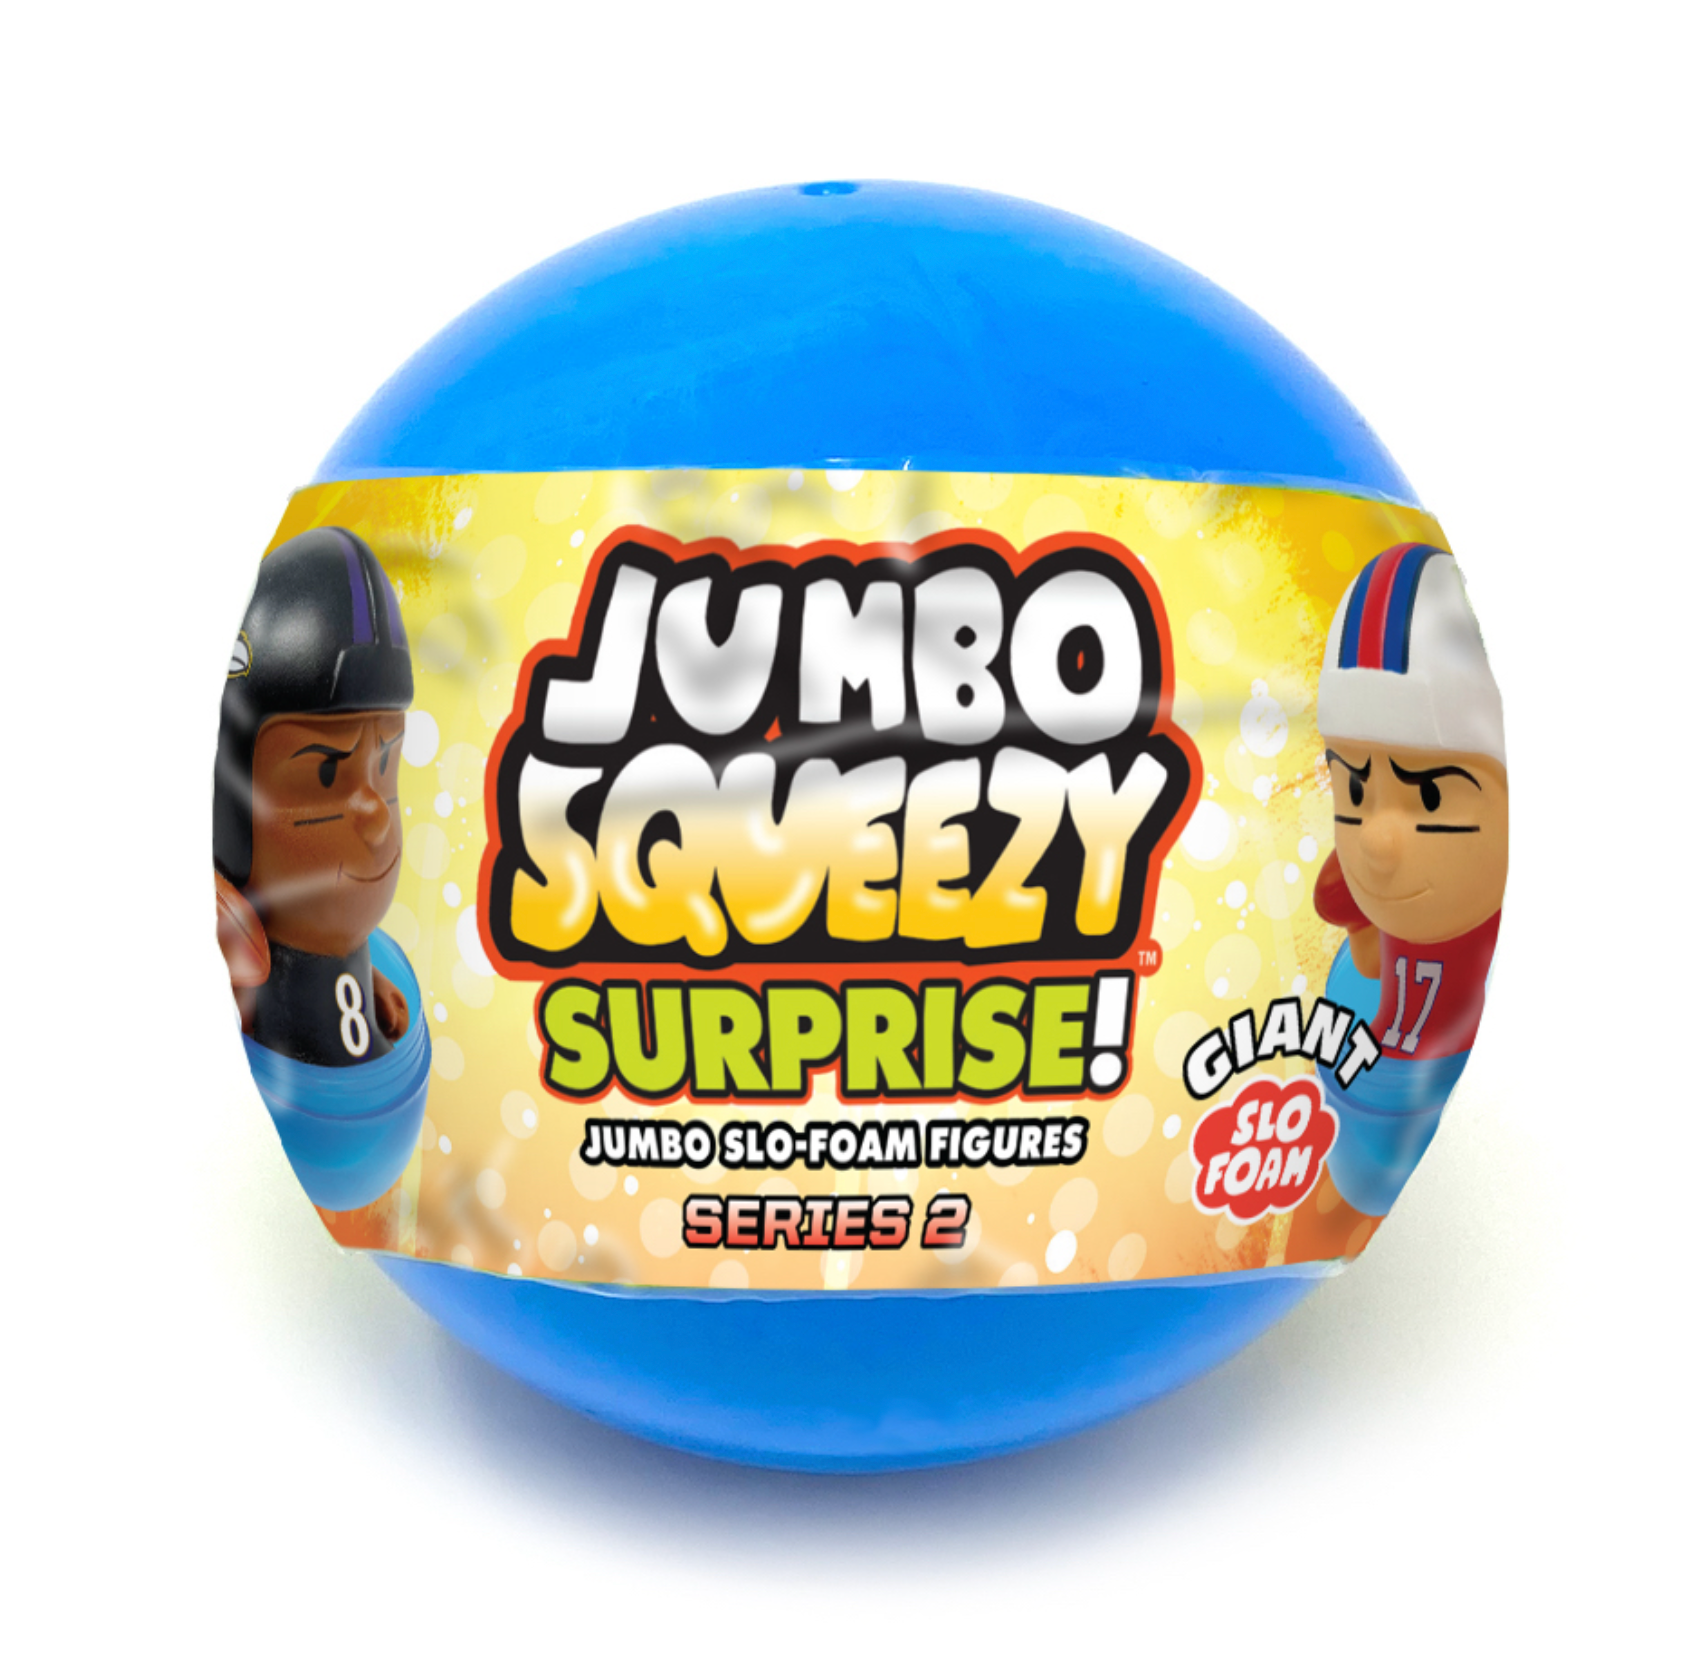 NFL Jumbo Squeezy Surprise! Capsule Series 2-1 figure per ball